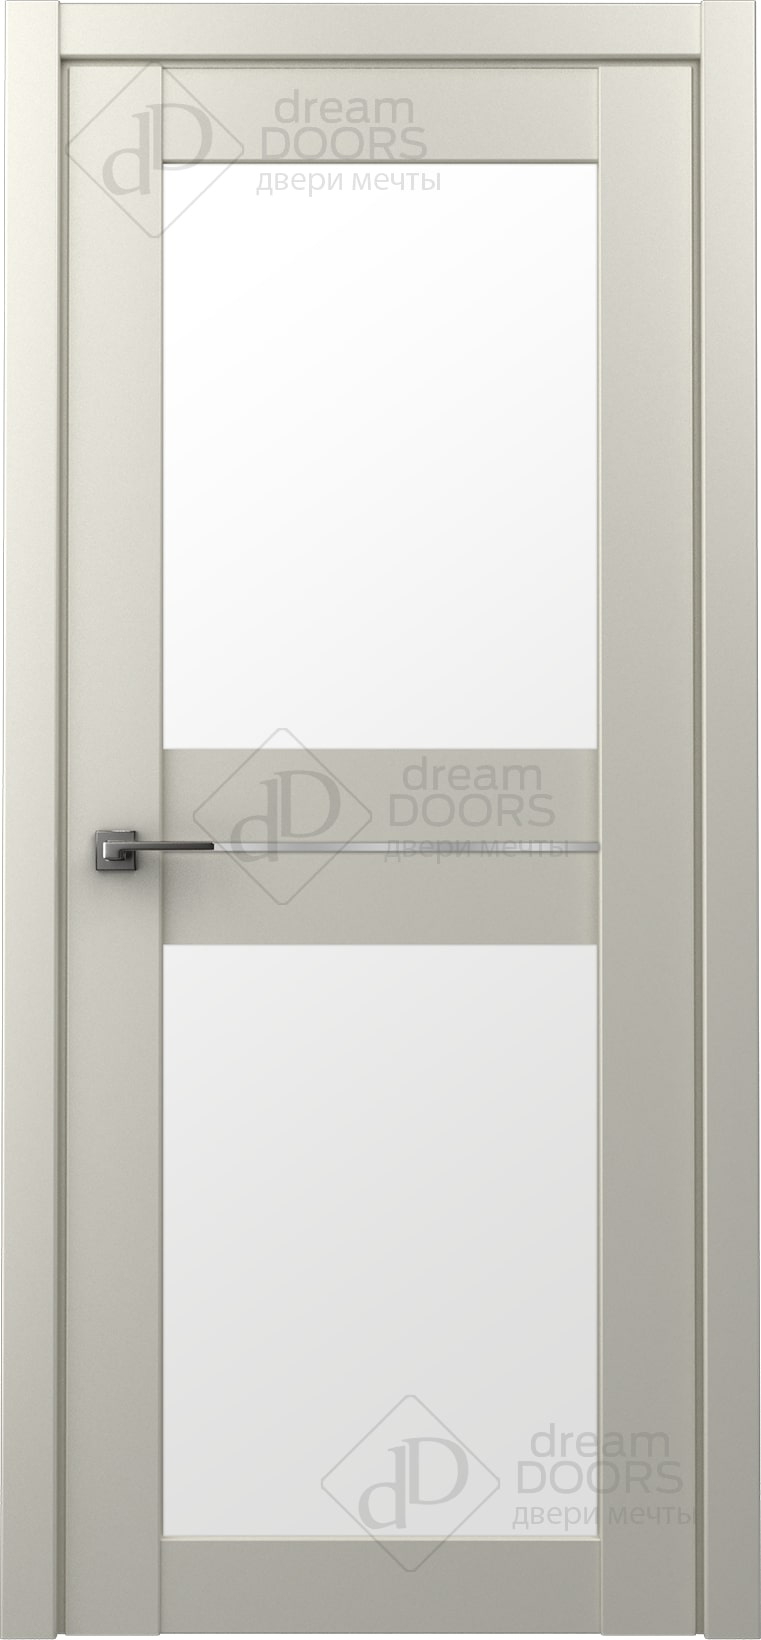 Dream Doors Межкомнатная дверь Престиж 2, арт. 16431 - фото №10